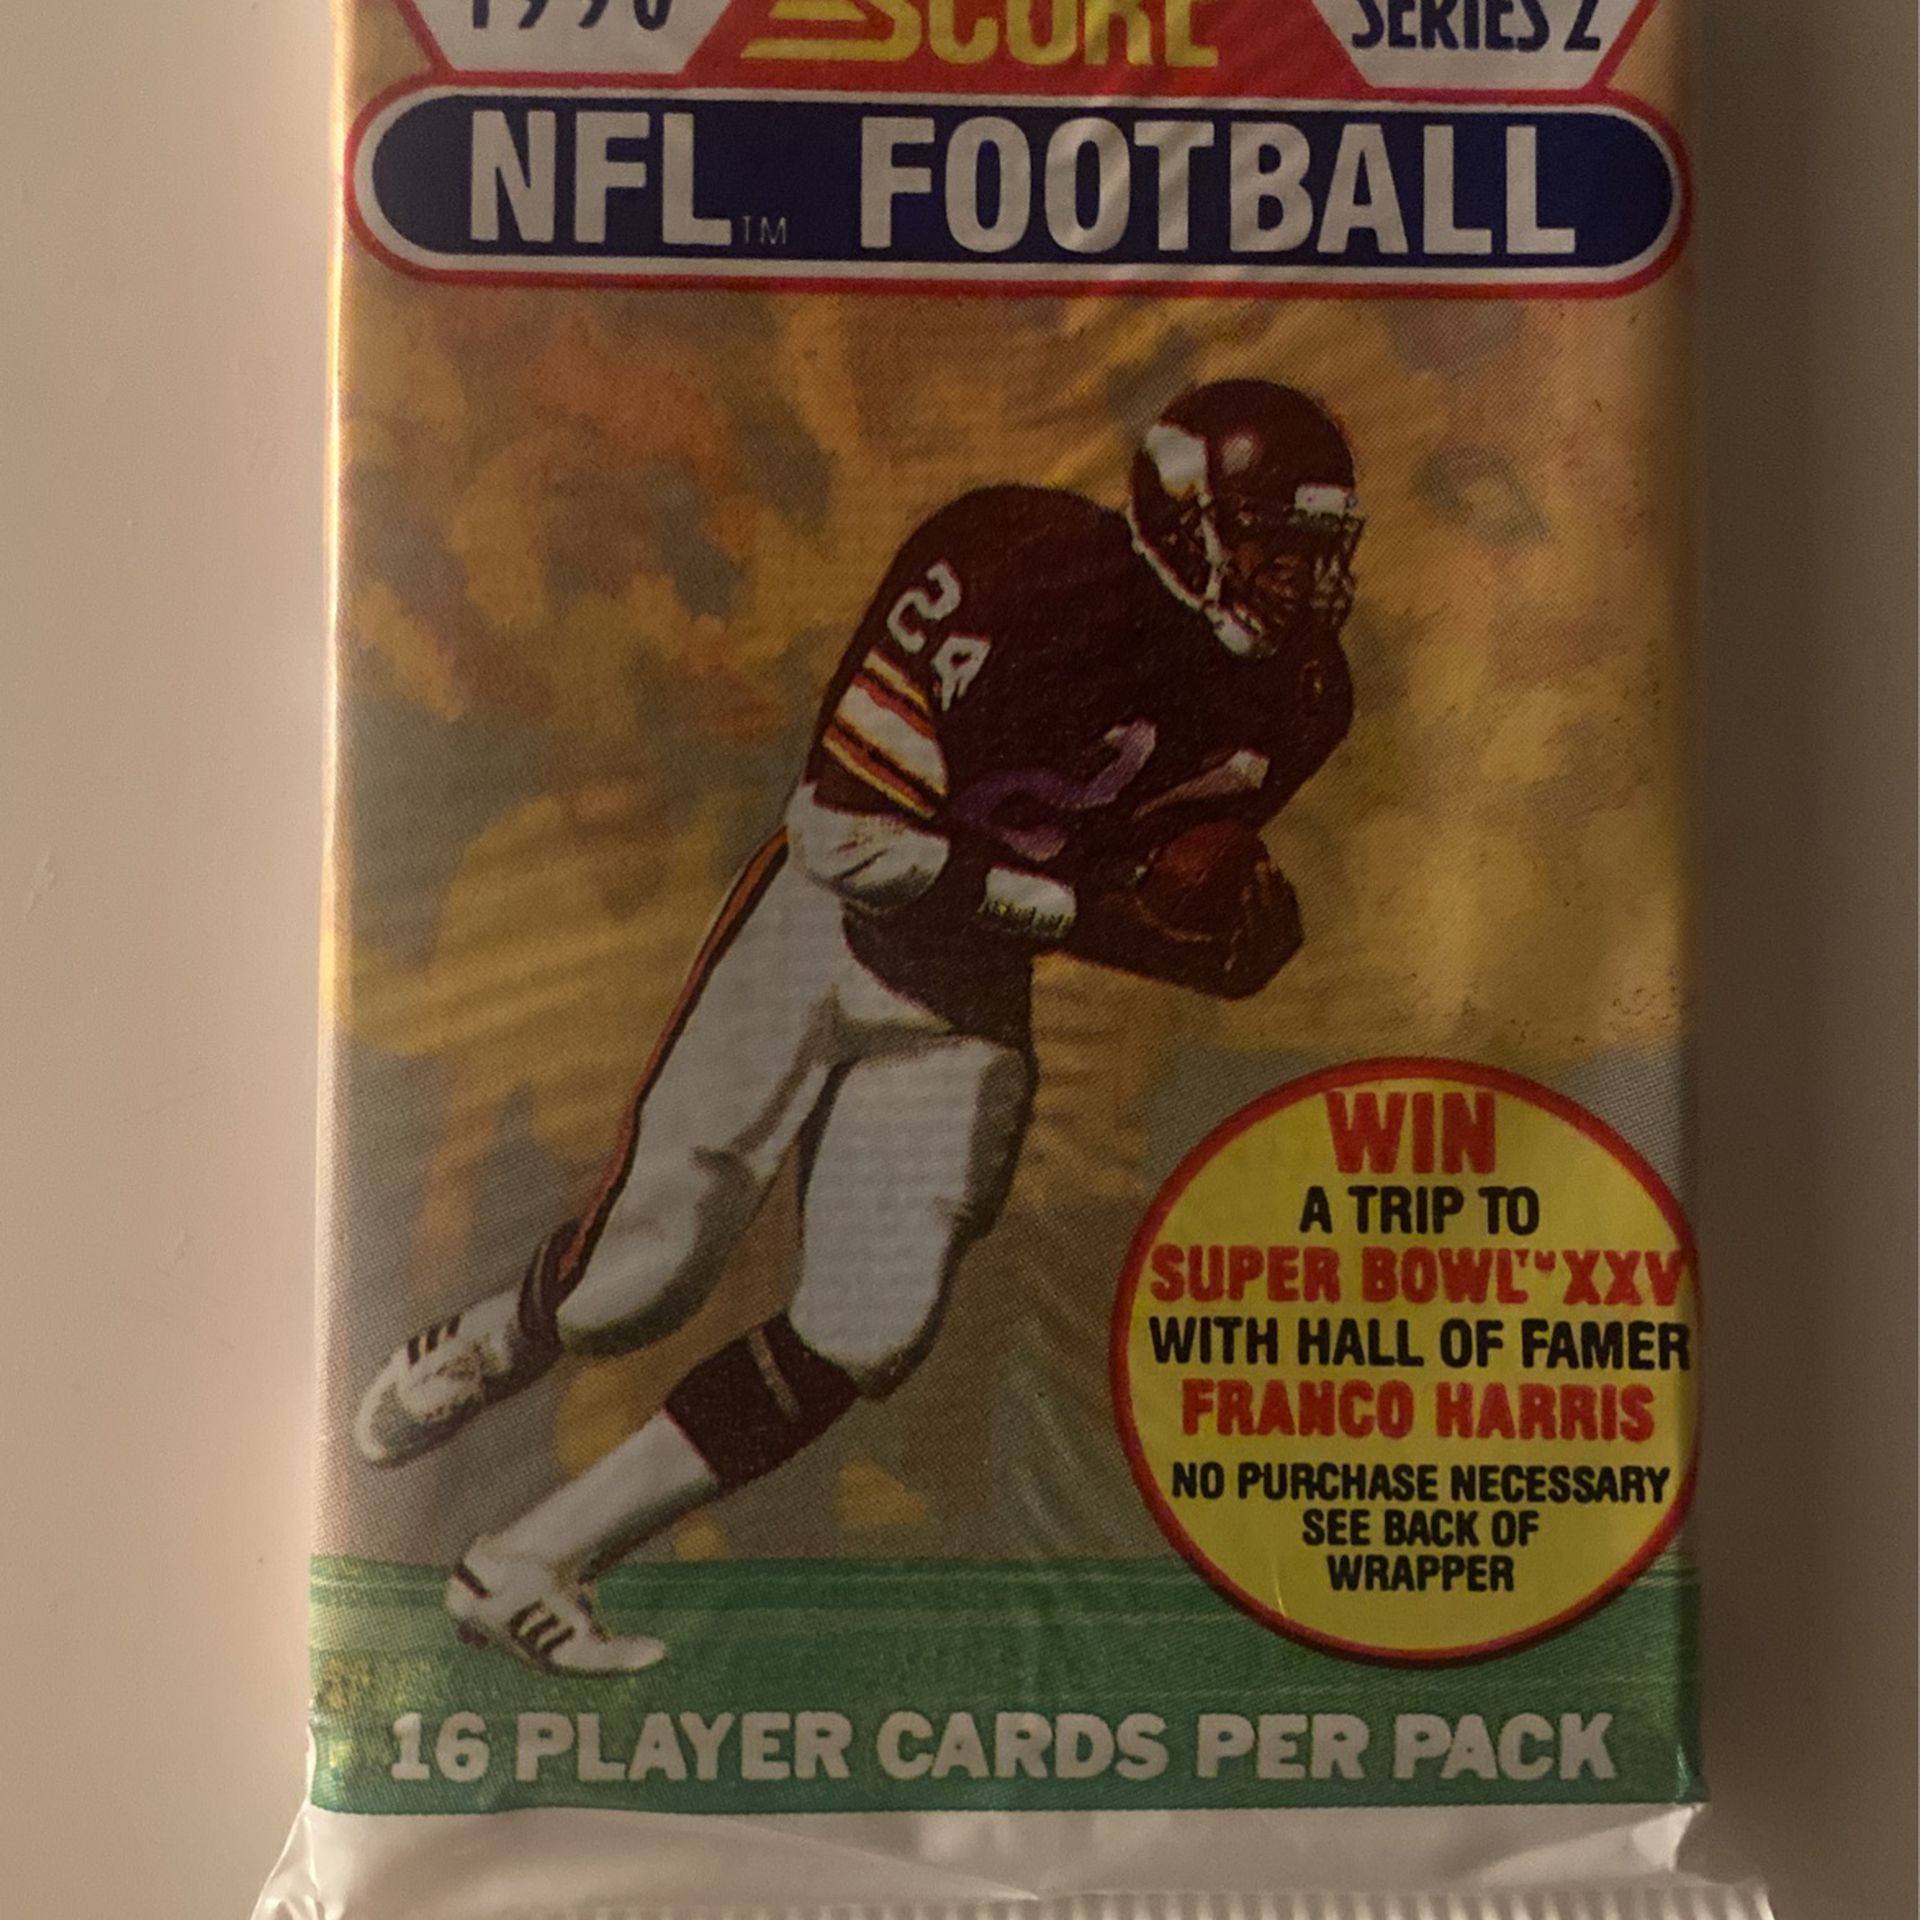 1990 Score Series 2 NFL Football Cards